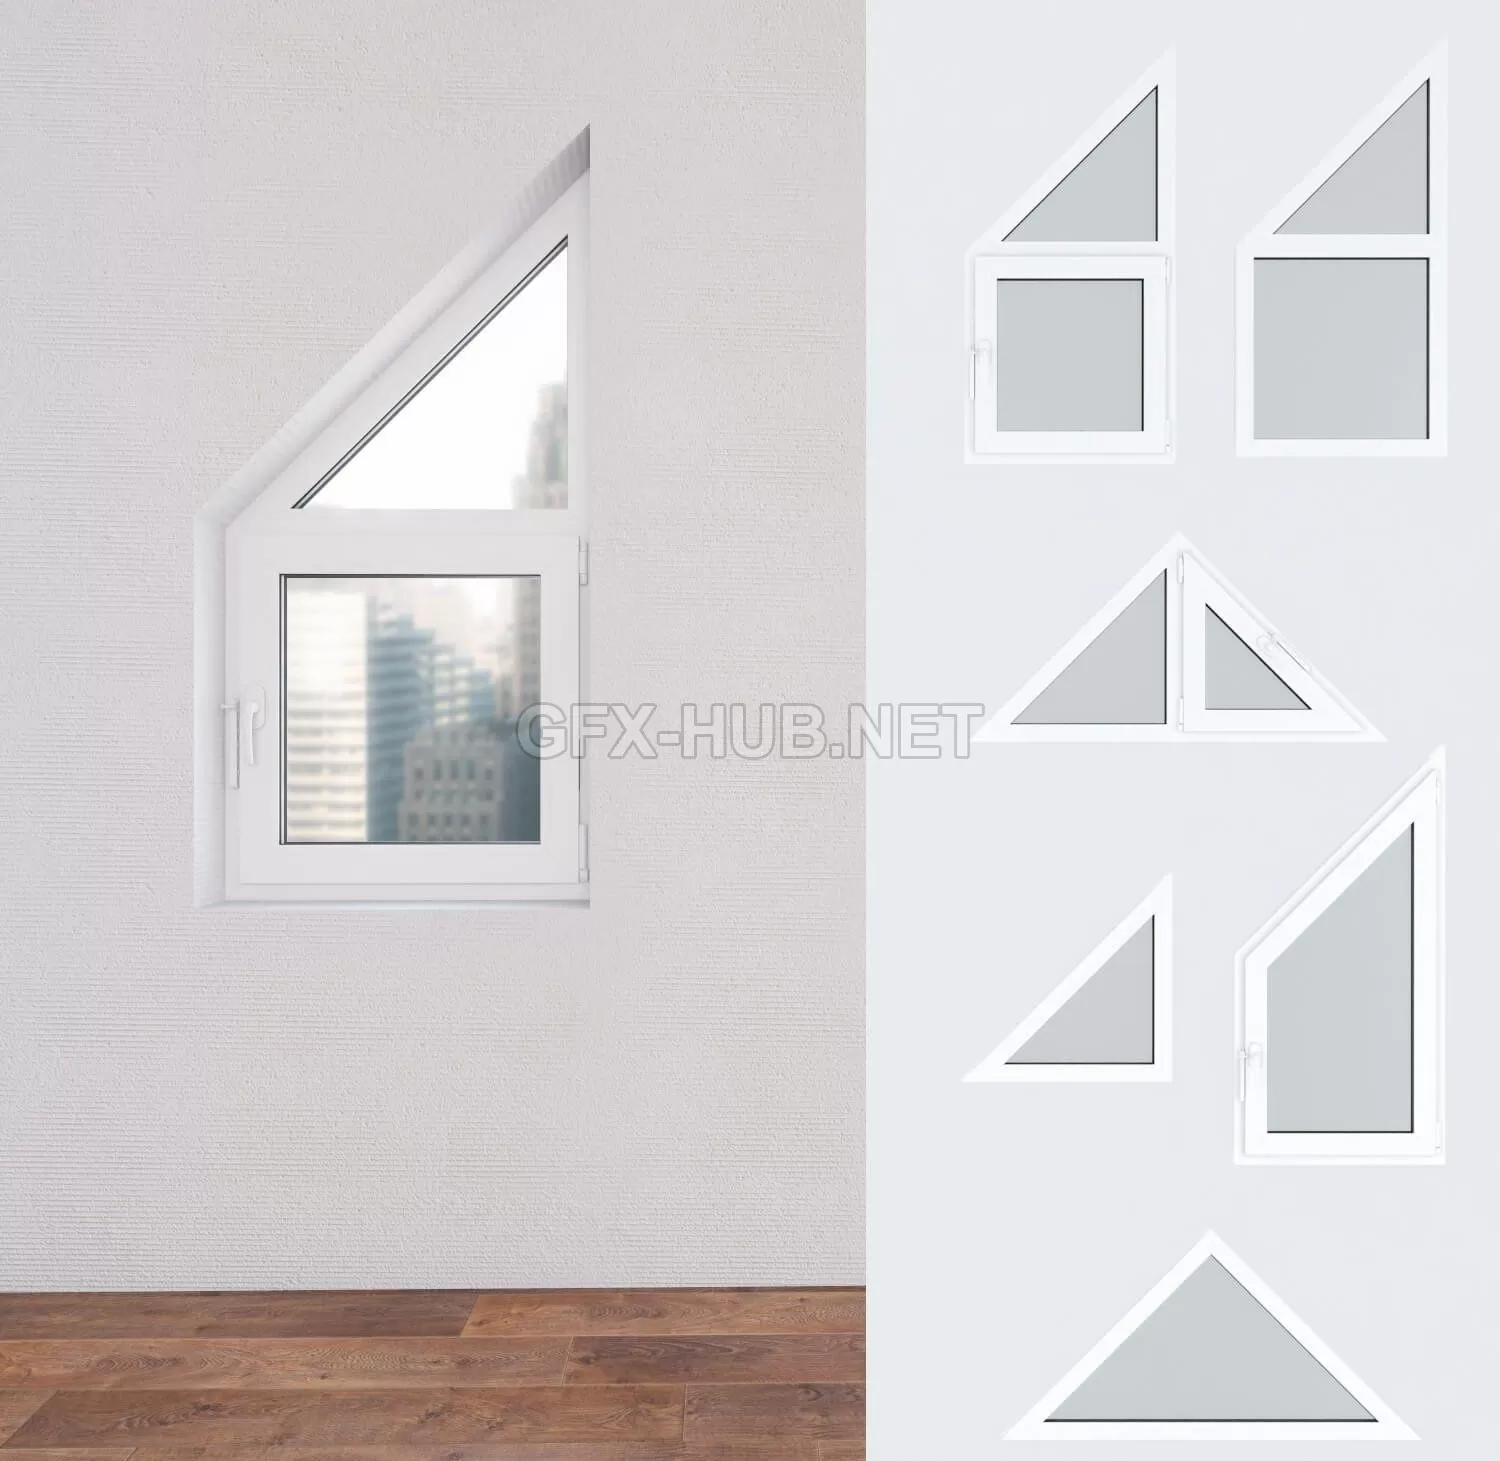 WINDOWS – A set of plastic windows 11